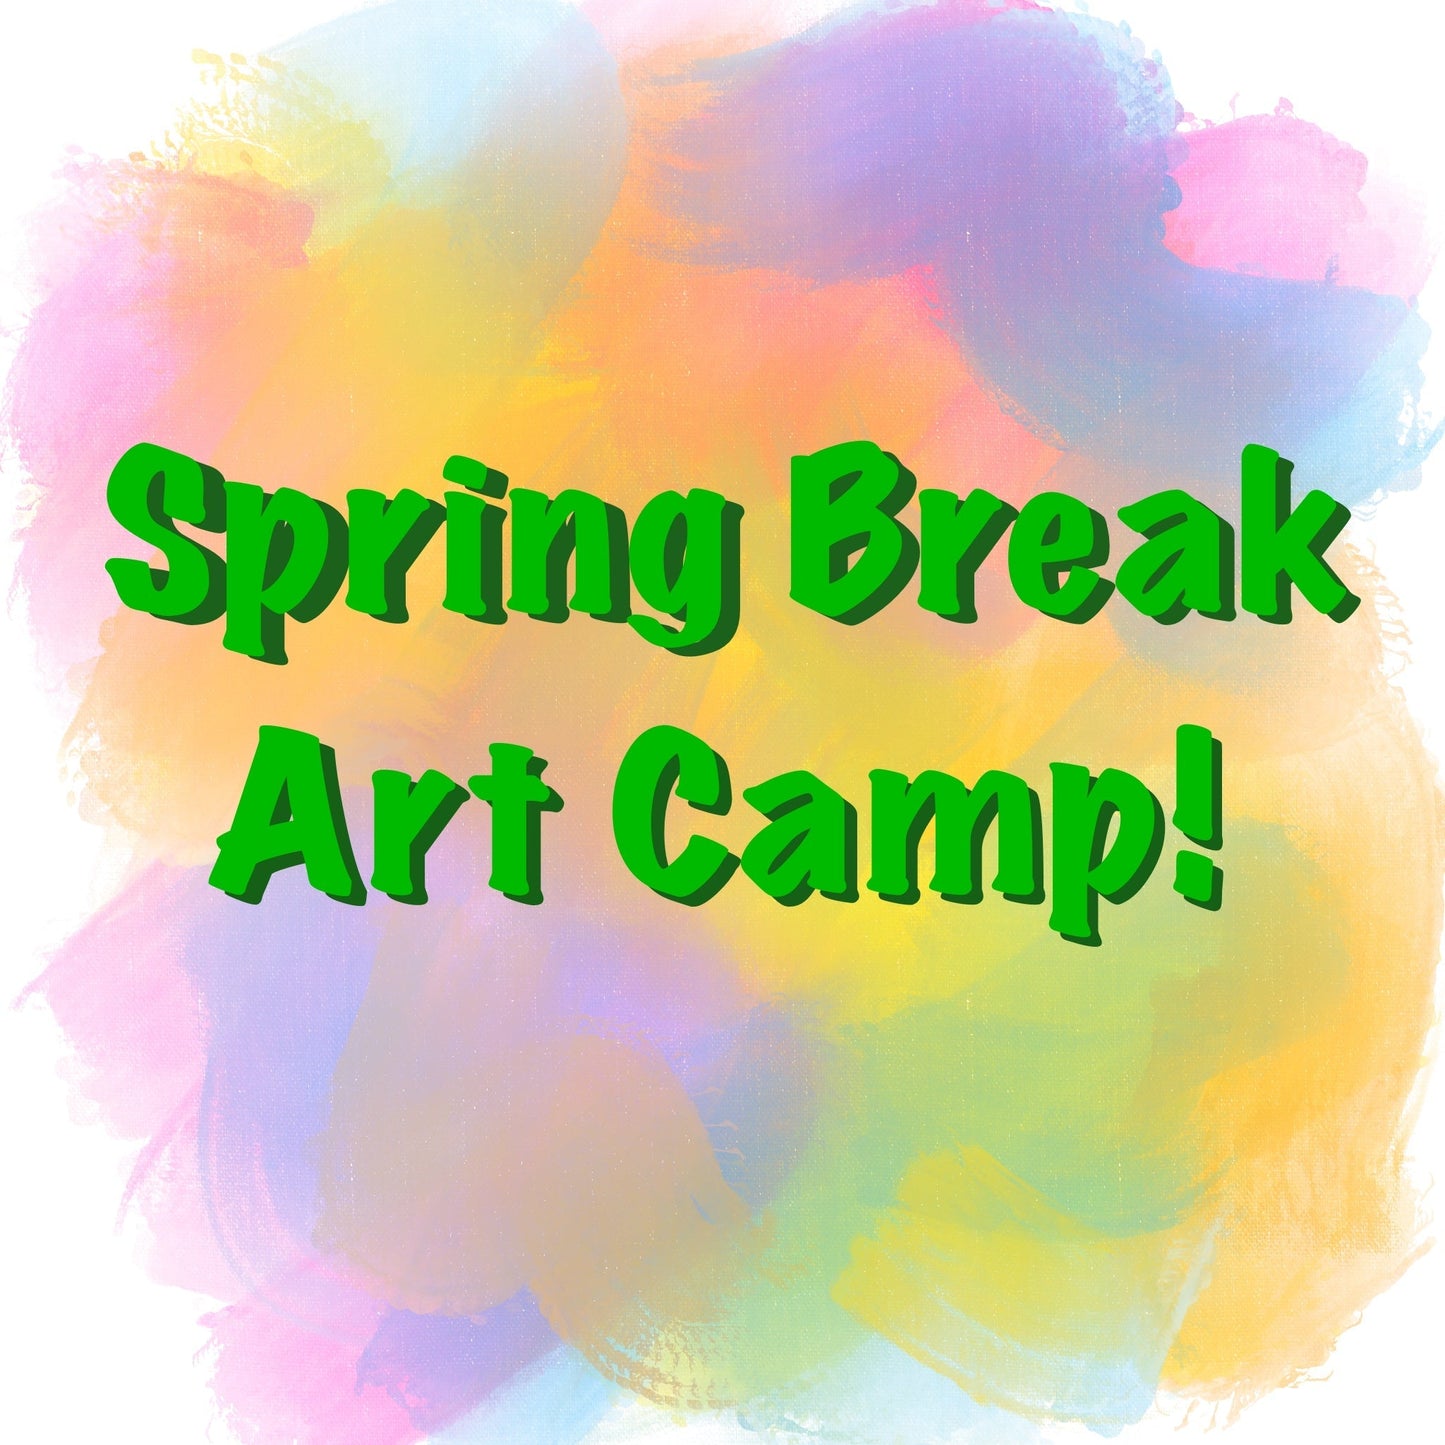 Spring Break Art Camp - 2-Day!